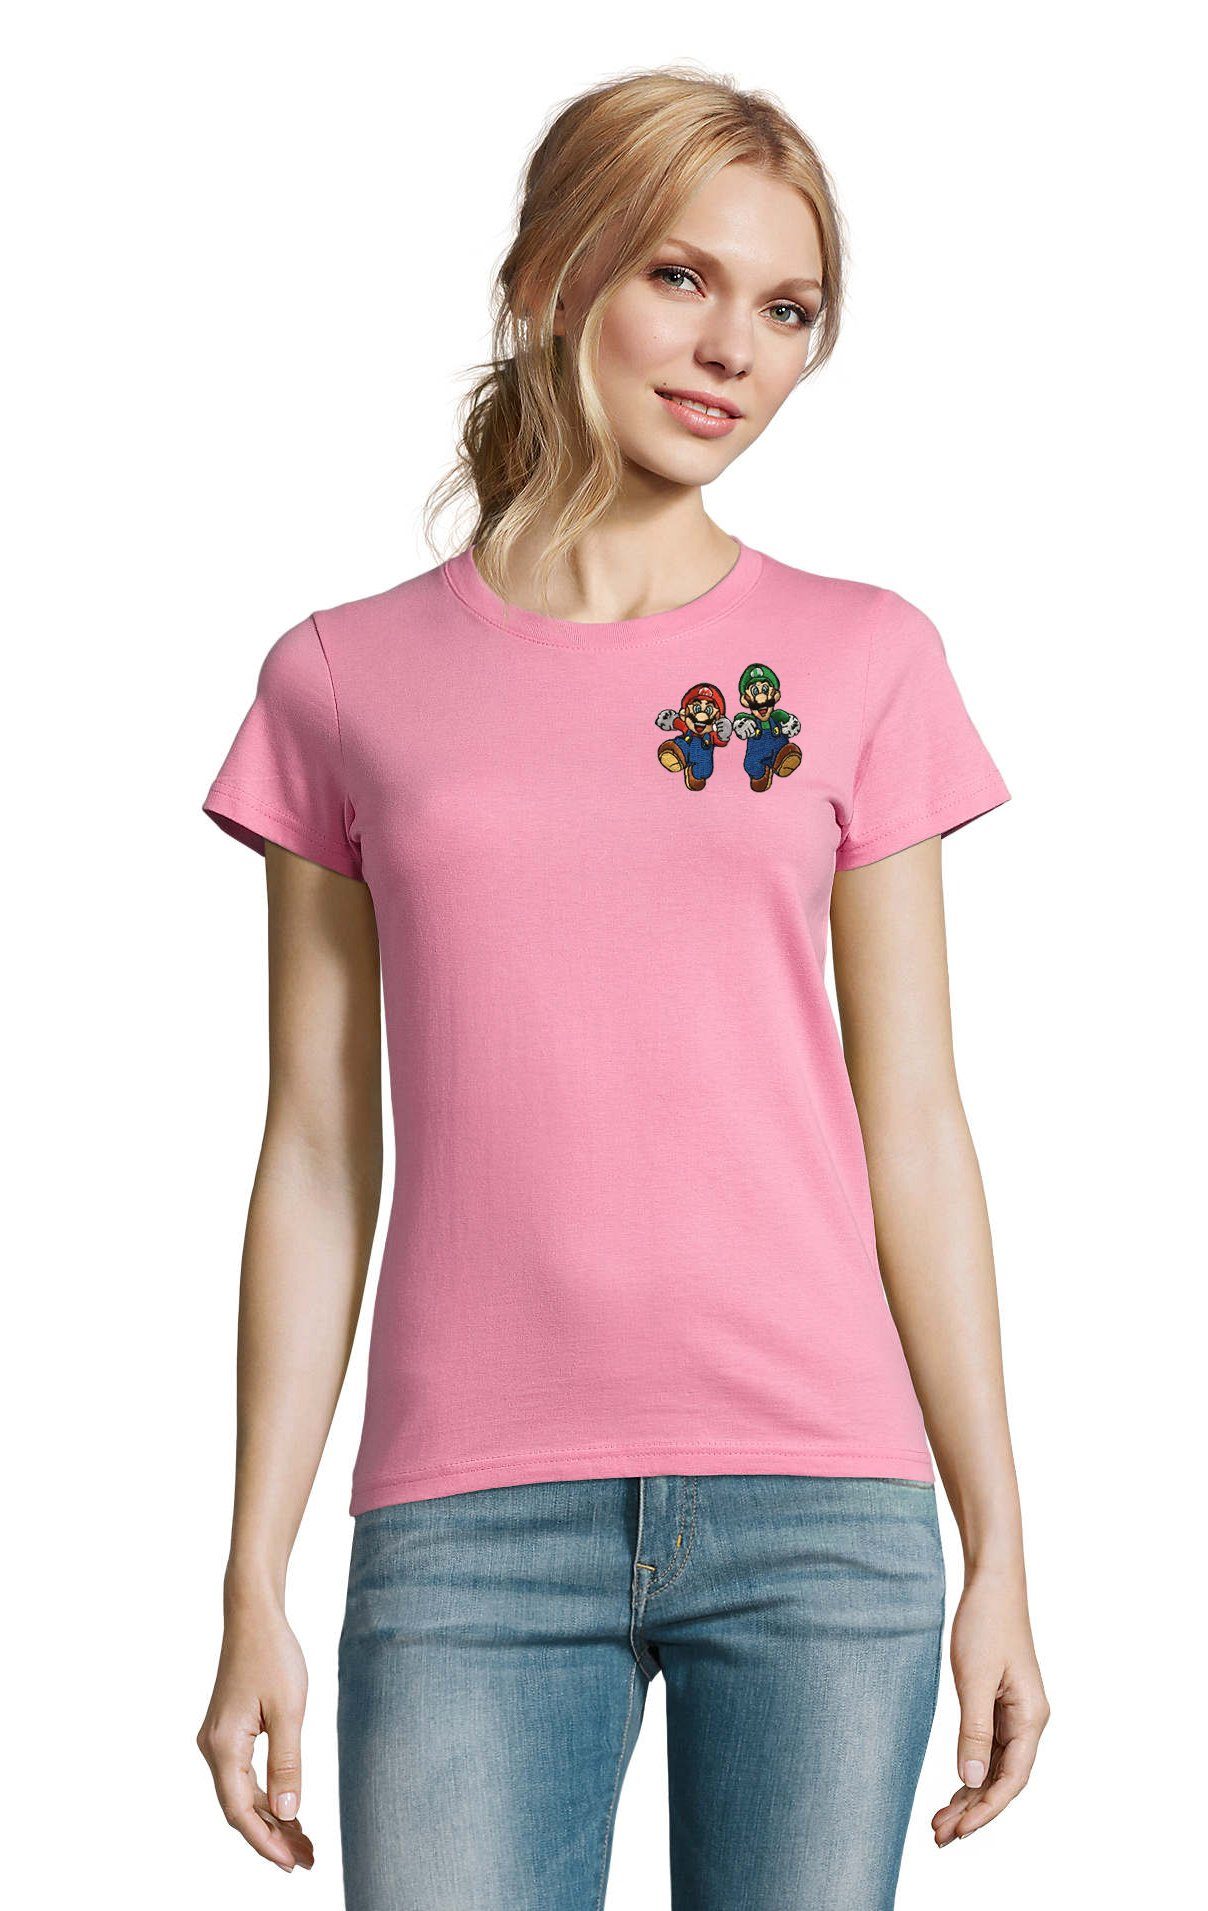 Rosa T-Shirt Gaming Mario & Stick Blondie Luigi & Brownie Bowser Nintendo Damen Brust Yoshi bestickt